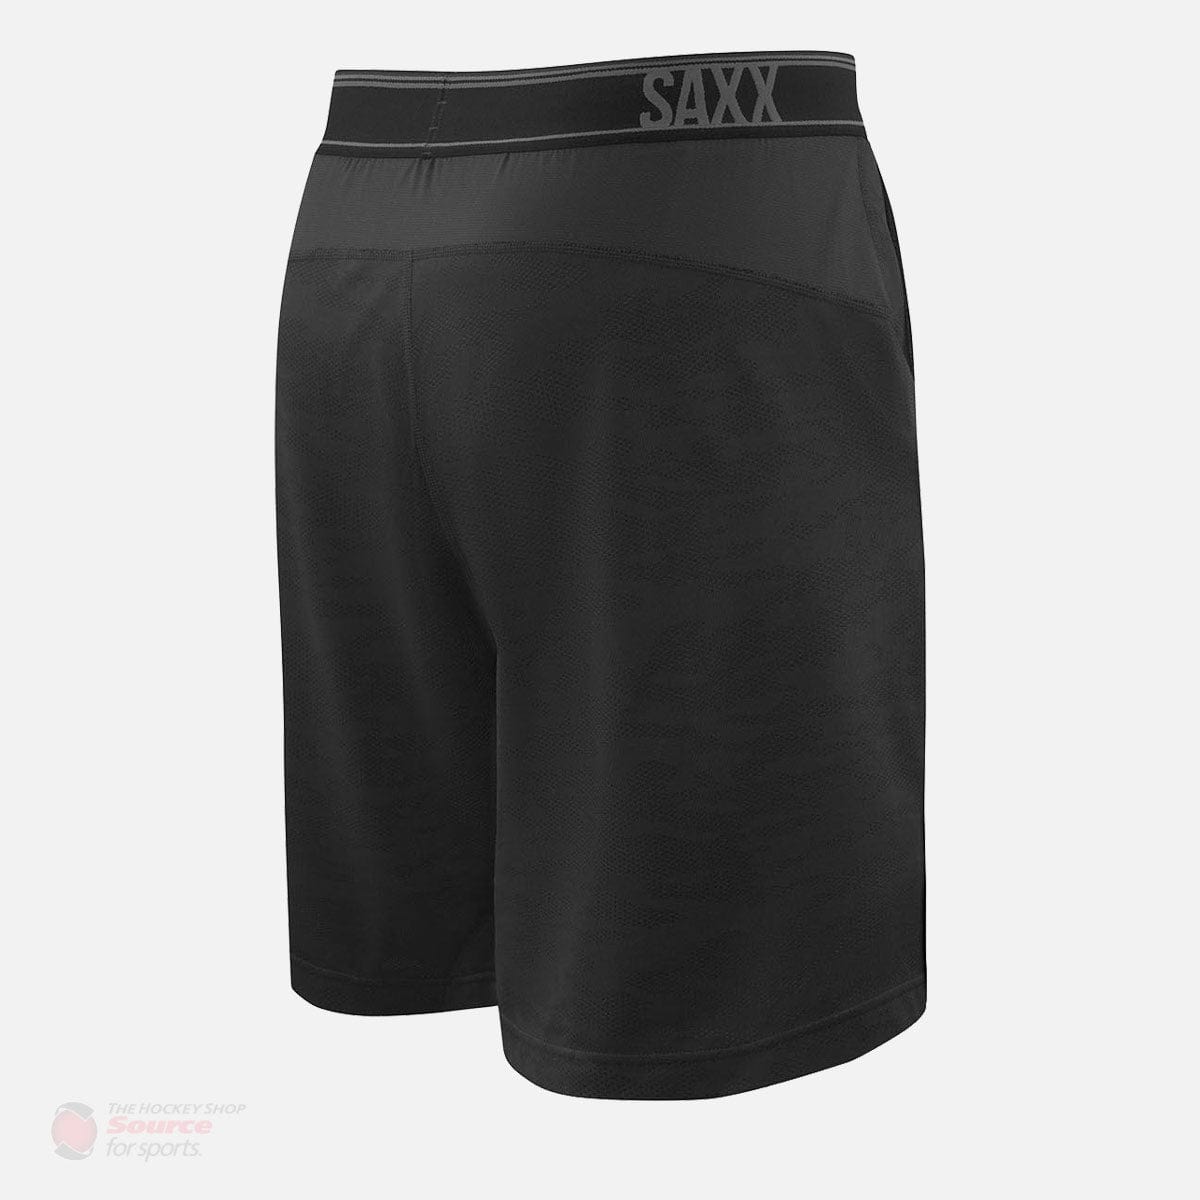 Saxx Legend 2N1 Shorts